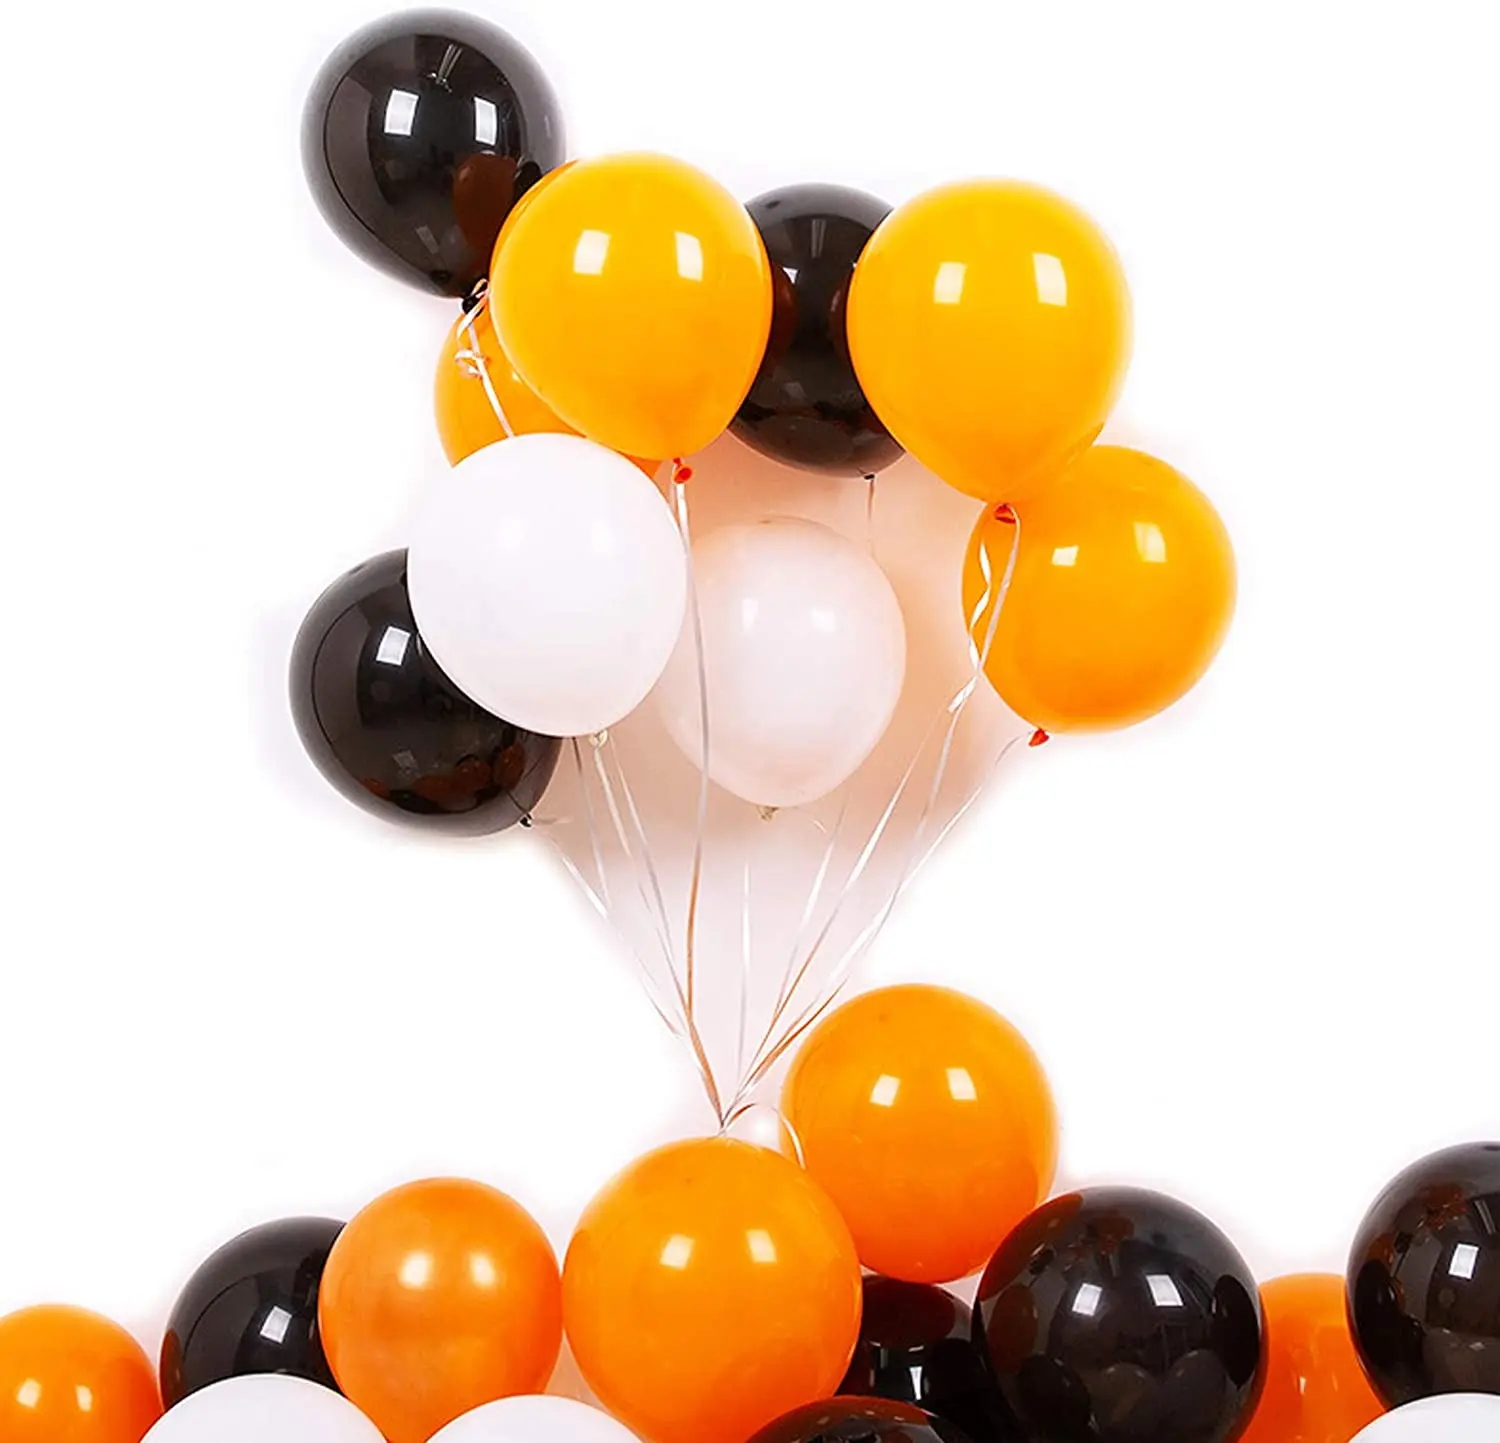 Details about   10x 12" Black/Orange Happy Halloween Latex Balloons Party Decor Kids Decoration 